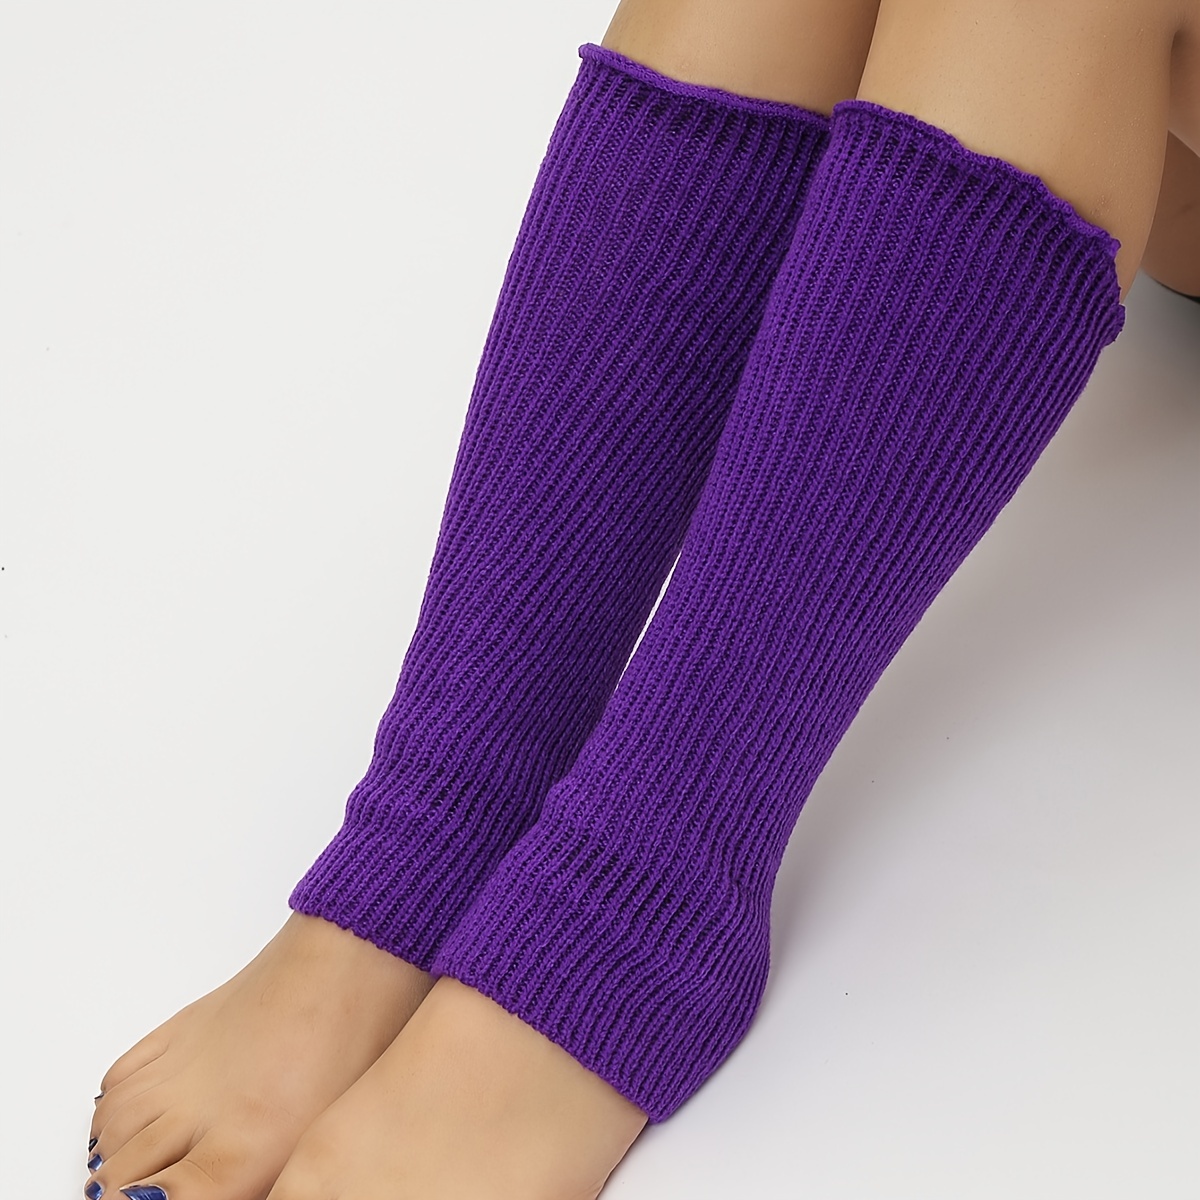 Leg Warmers For Women 80s Cable Knit Leg Warmer For Ballet Dance